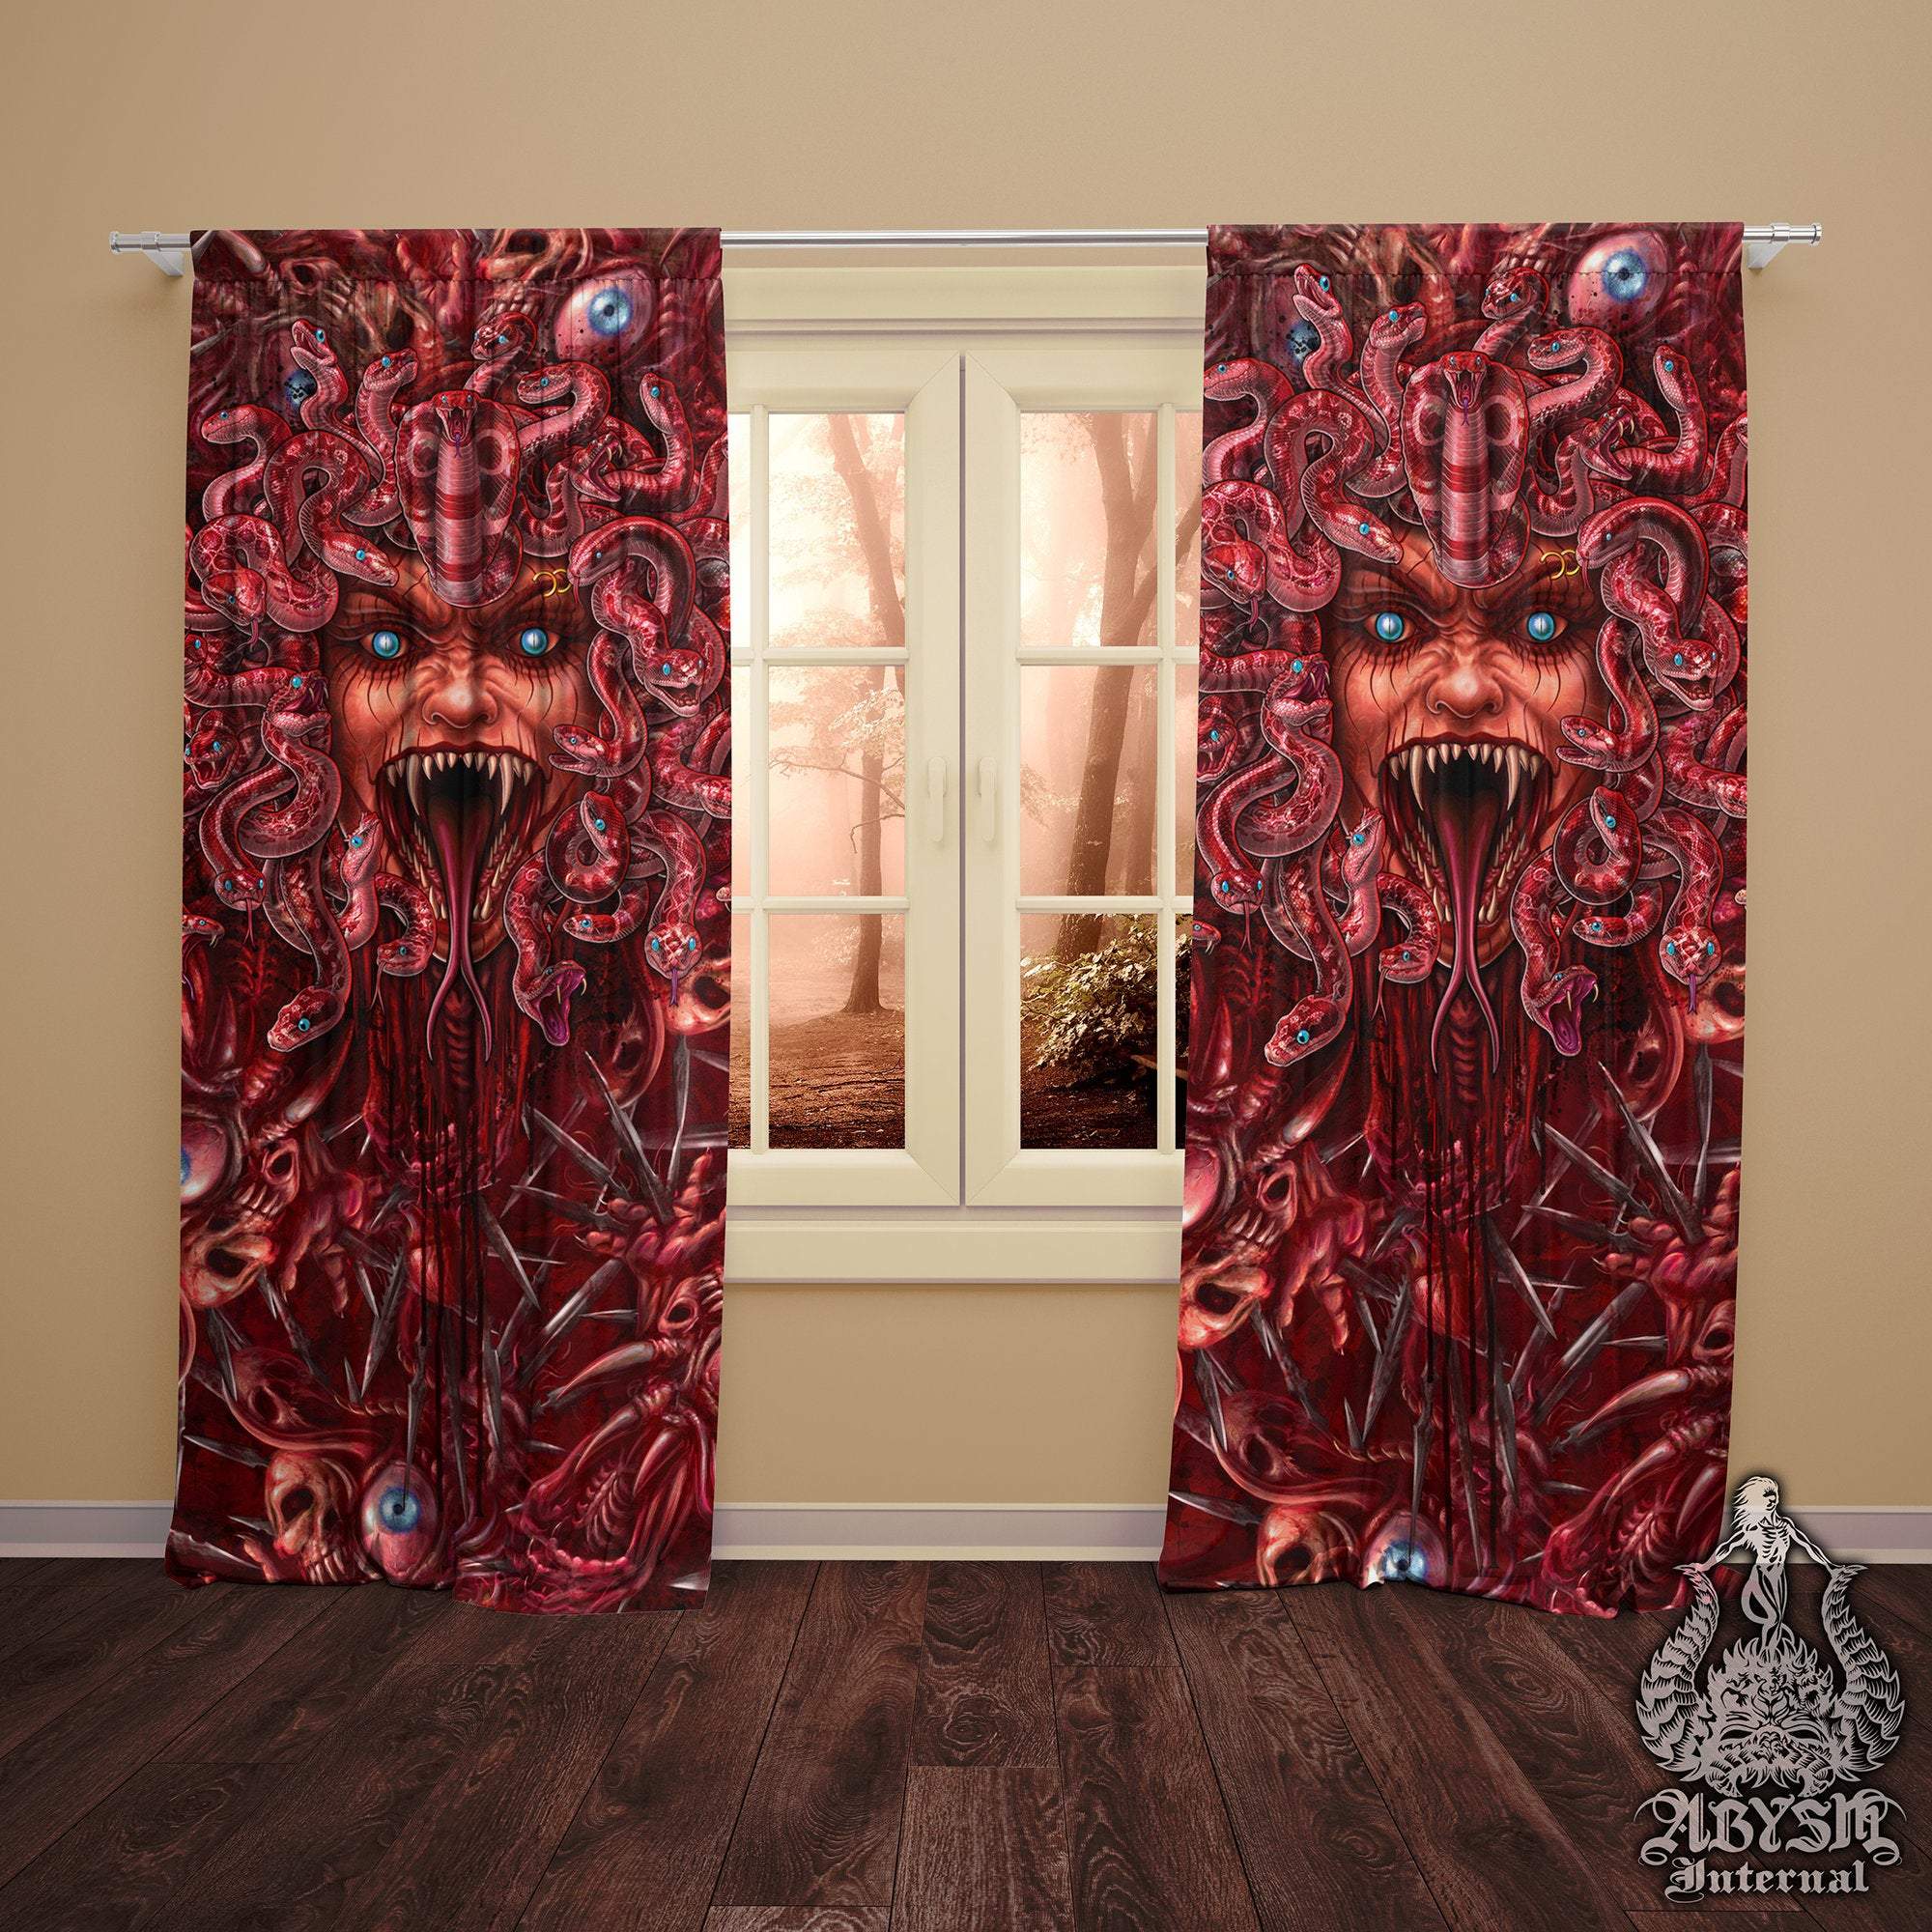 Horror Blackout Curtains, Long Window Panels, Spooky Art Print, Halloween Decor - Gore and Blood, Medusa & Snakes, Rage - Abysm Internal